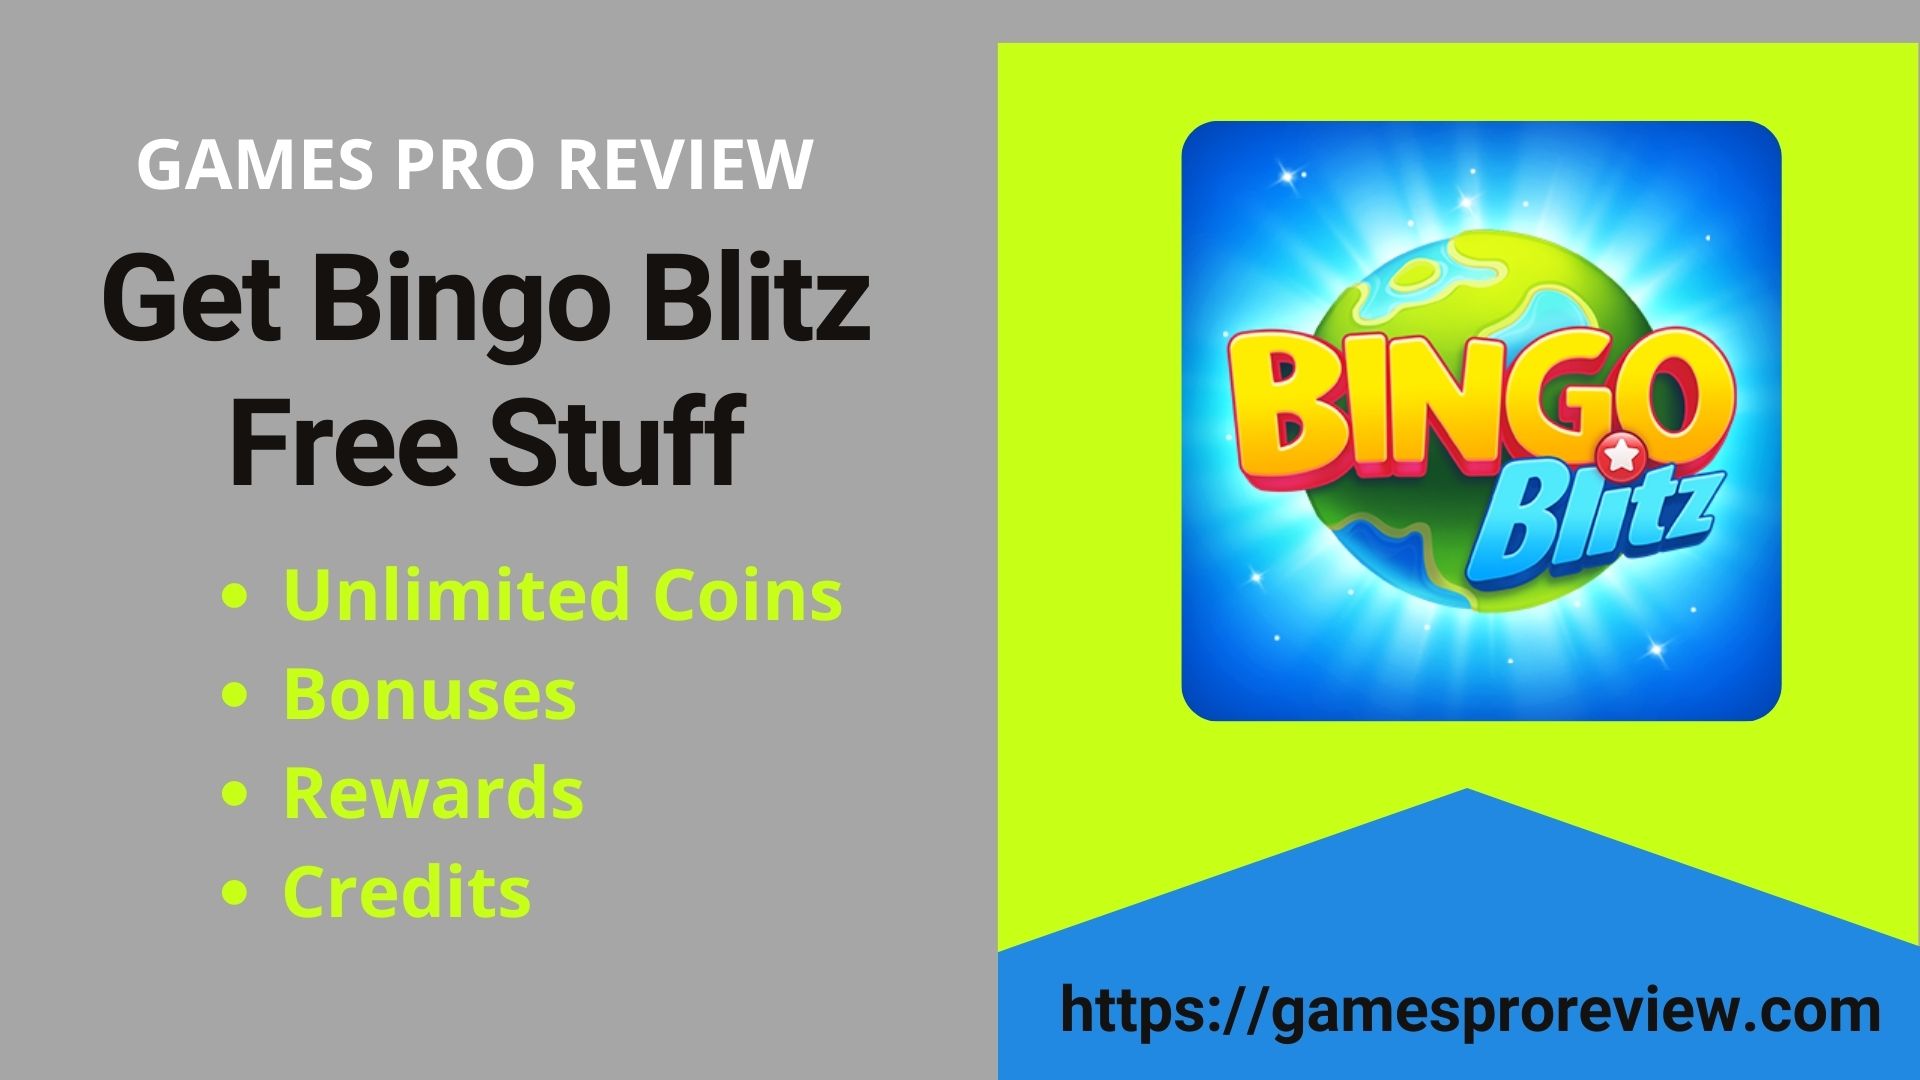 Get Bingo Blitz Free Stuff: Unlimited Coins, Bonuses, Rewards, And Credits